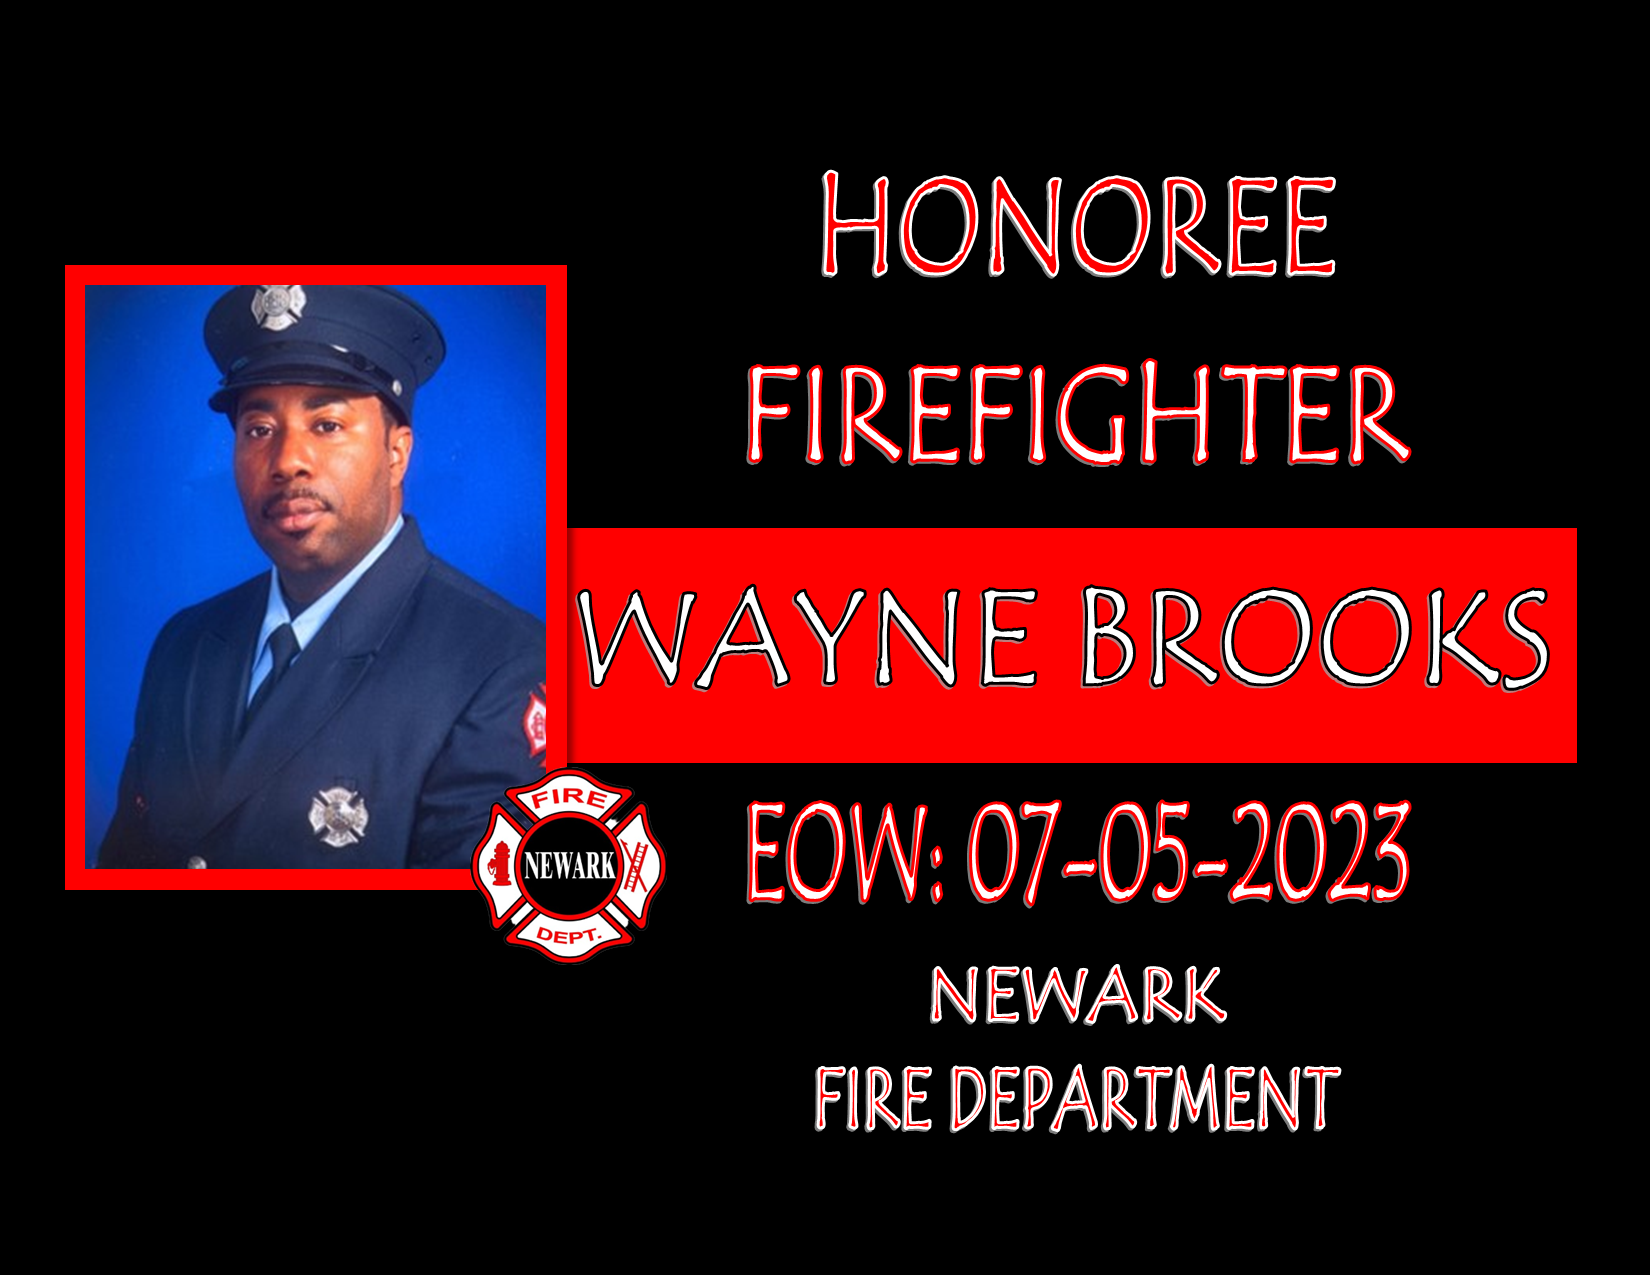 Wayne Brooks Honoree Photo PNG.png